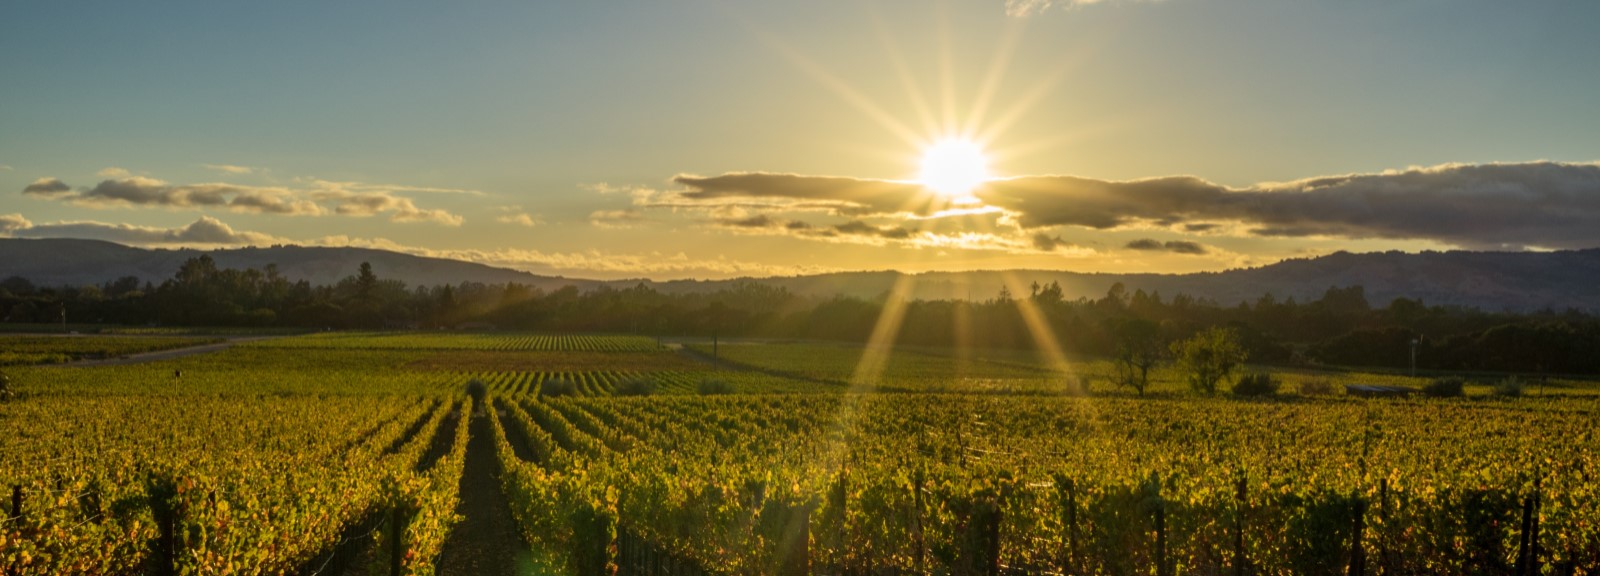 Sonoma vineyard at sunset